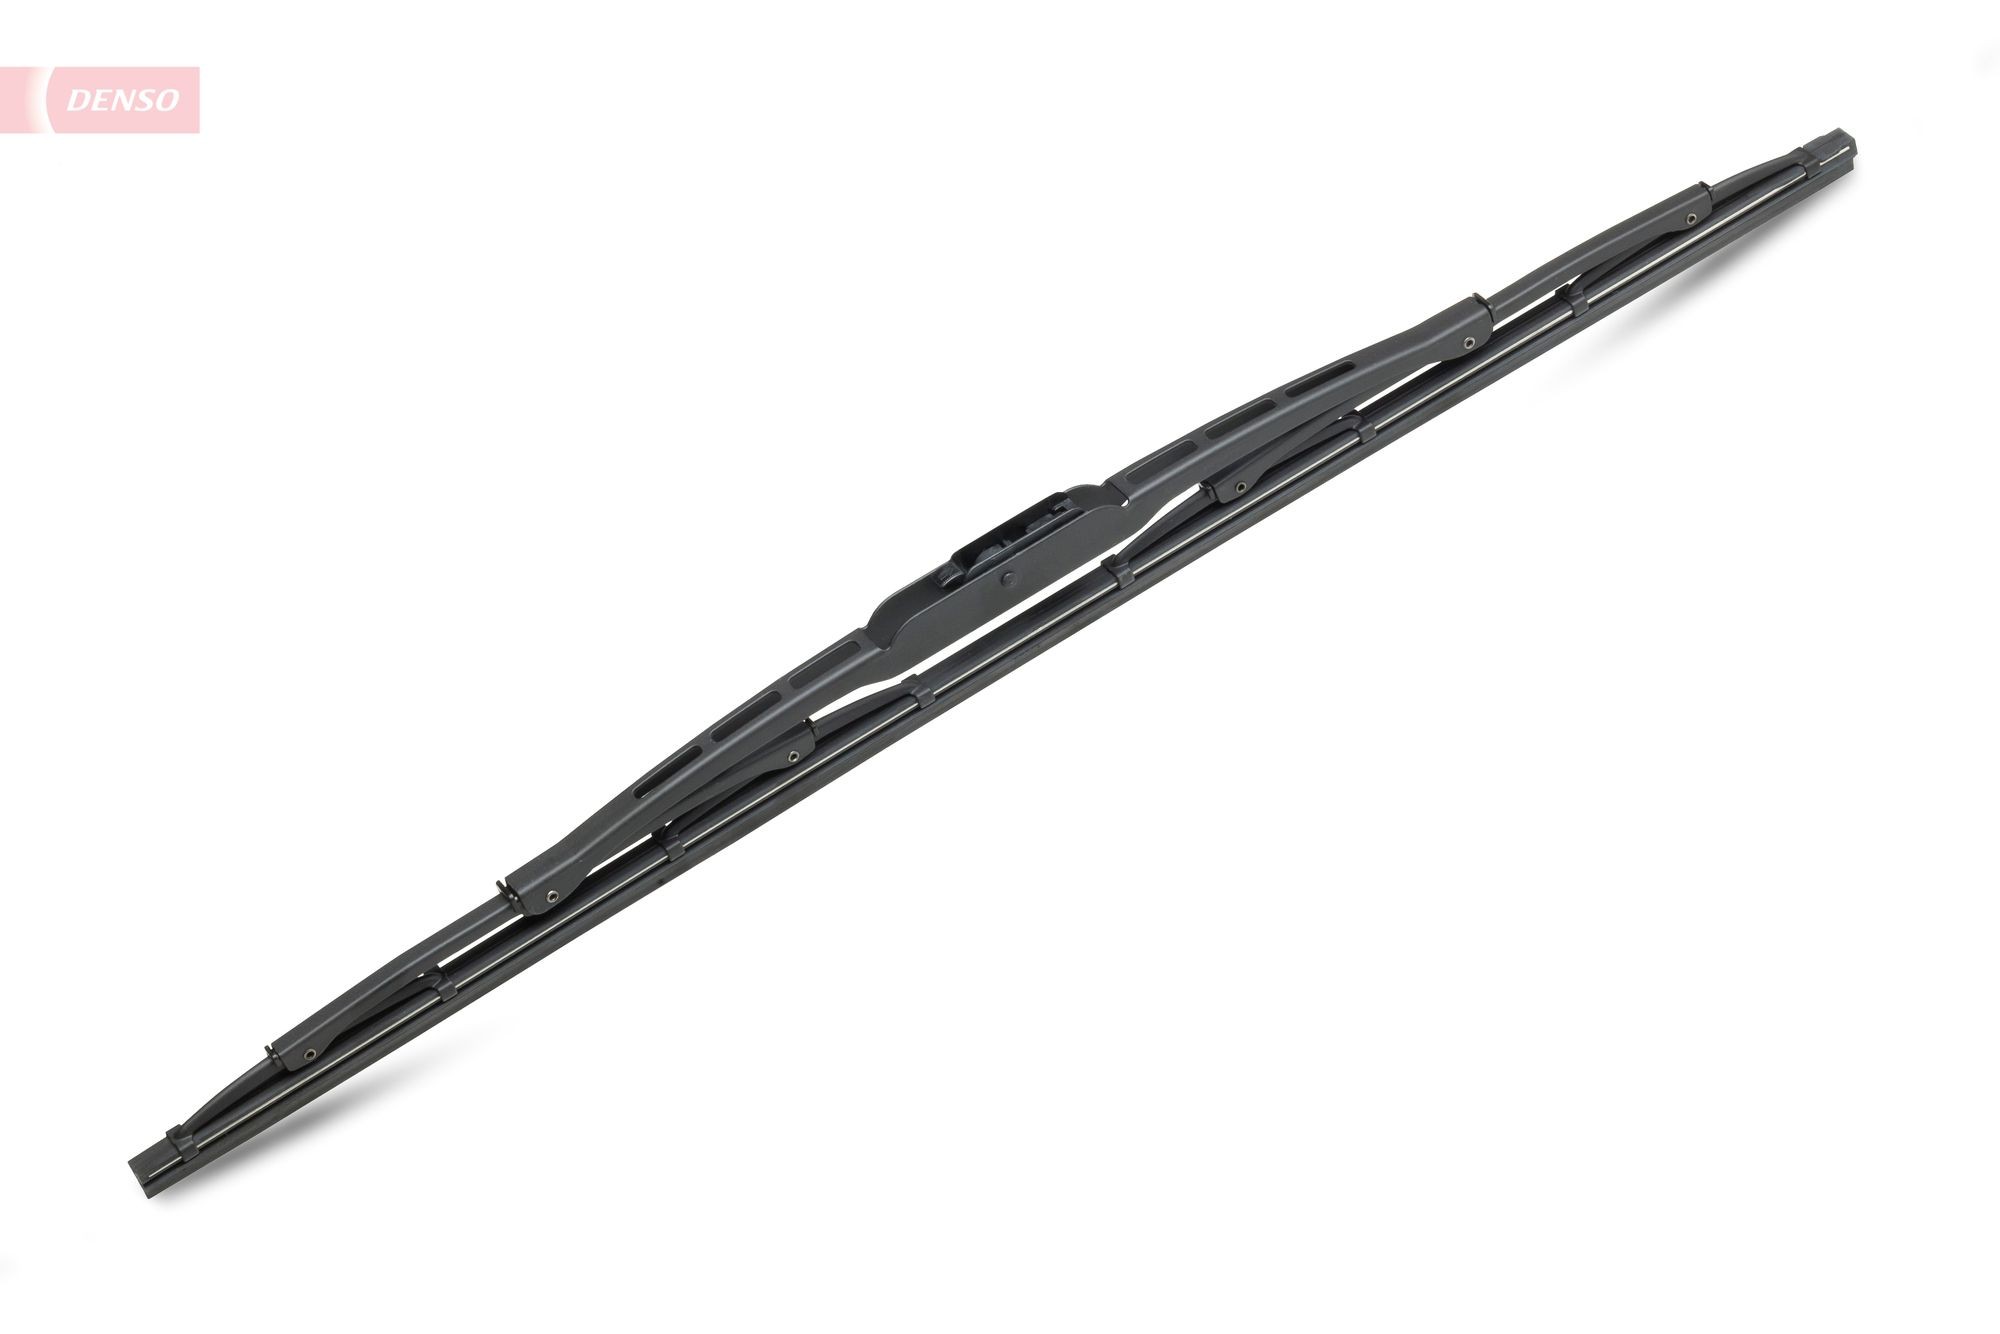 DENSO Standard 550 mm, Standard, 22 Inch Wiper blades DM-555 buy